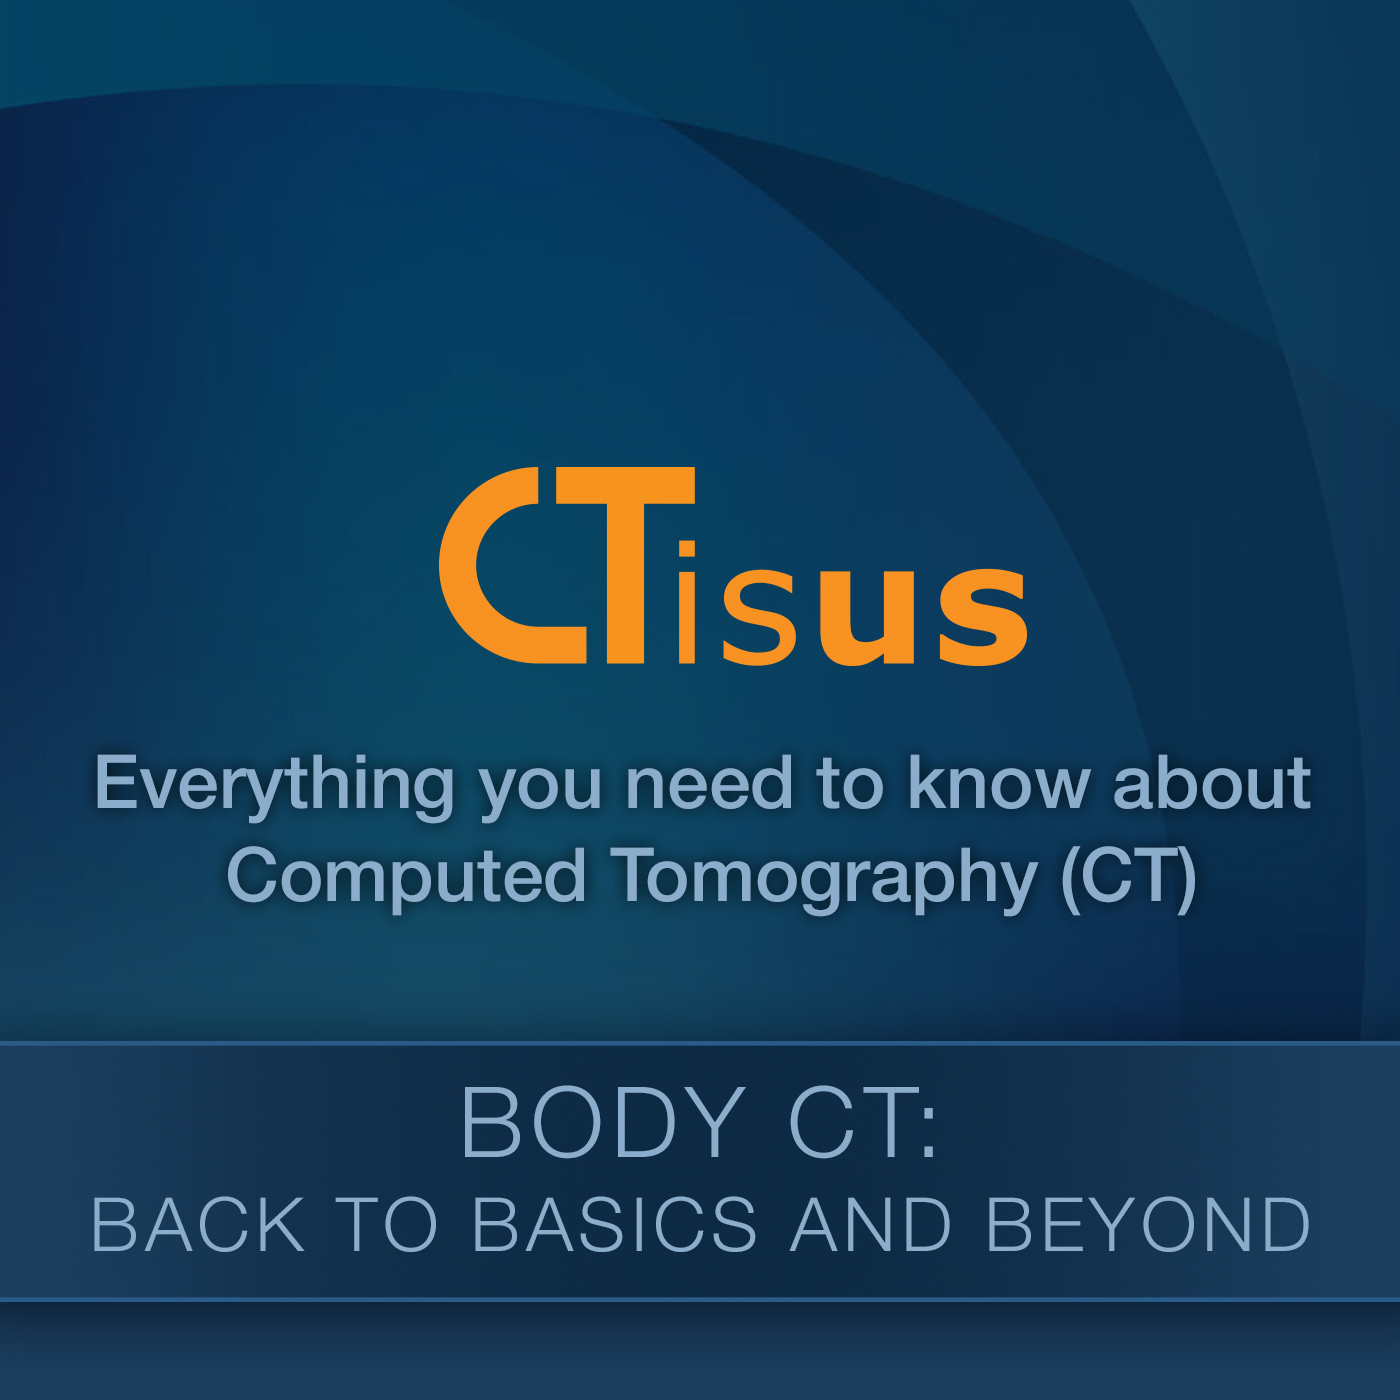 Body CT 2015-2016: Back to Basics and Beyond - CTisus.com